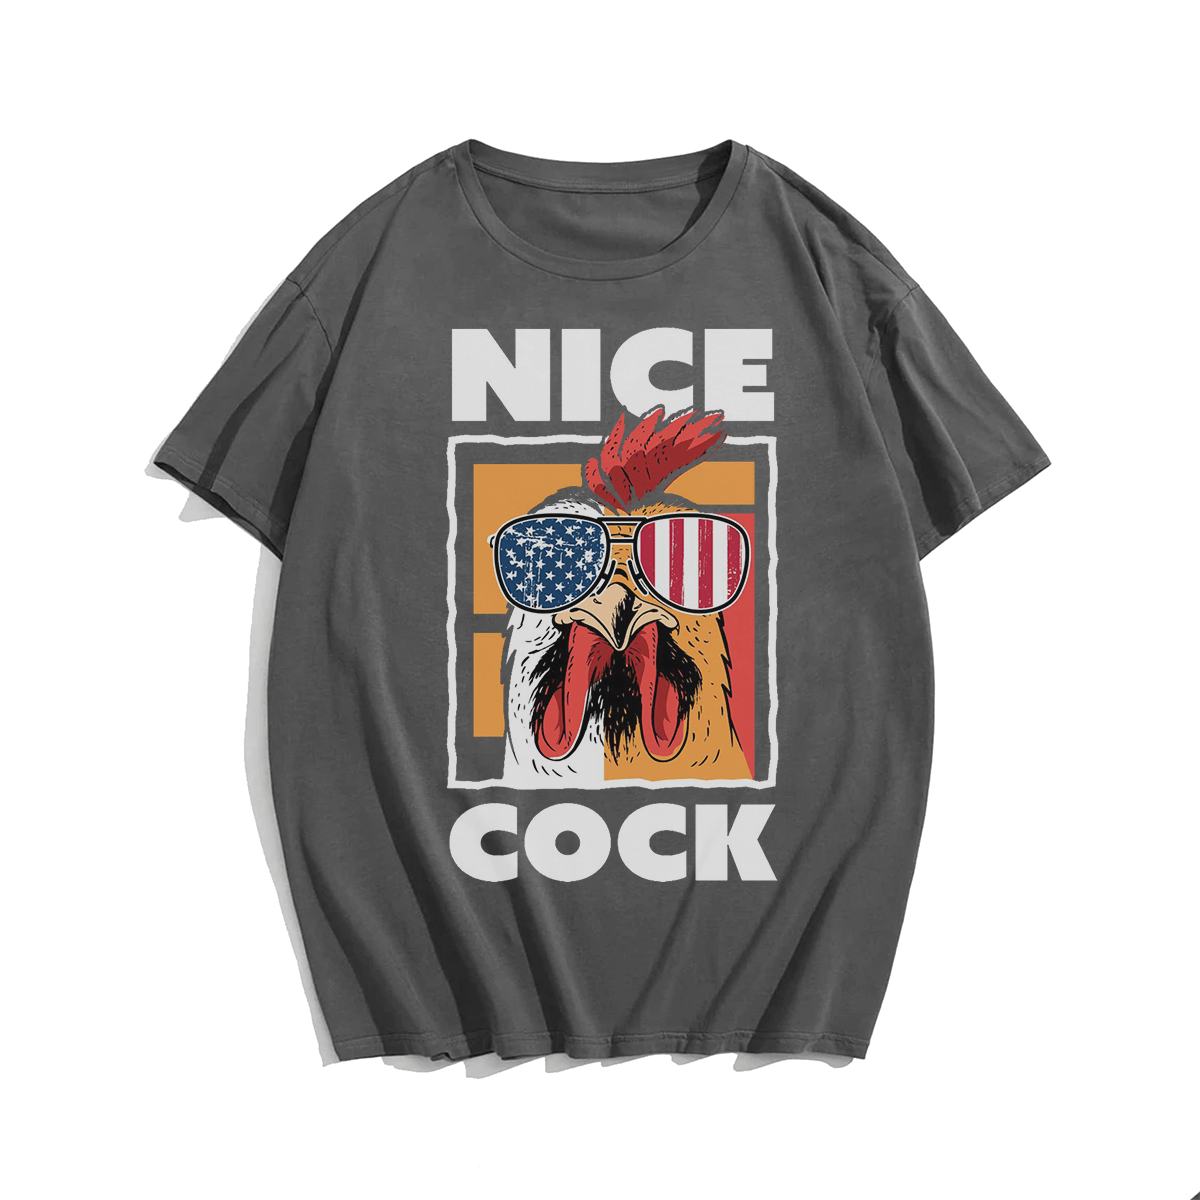 Nick Cock Men Plus Size Oversize T-shirt for Big & Tall Man